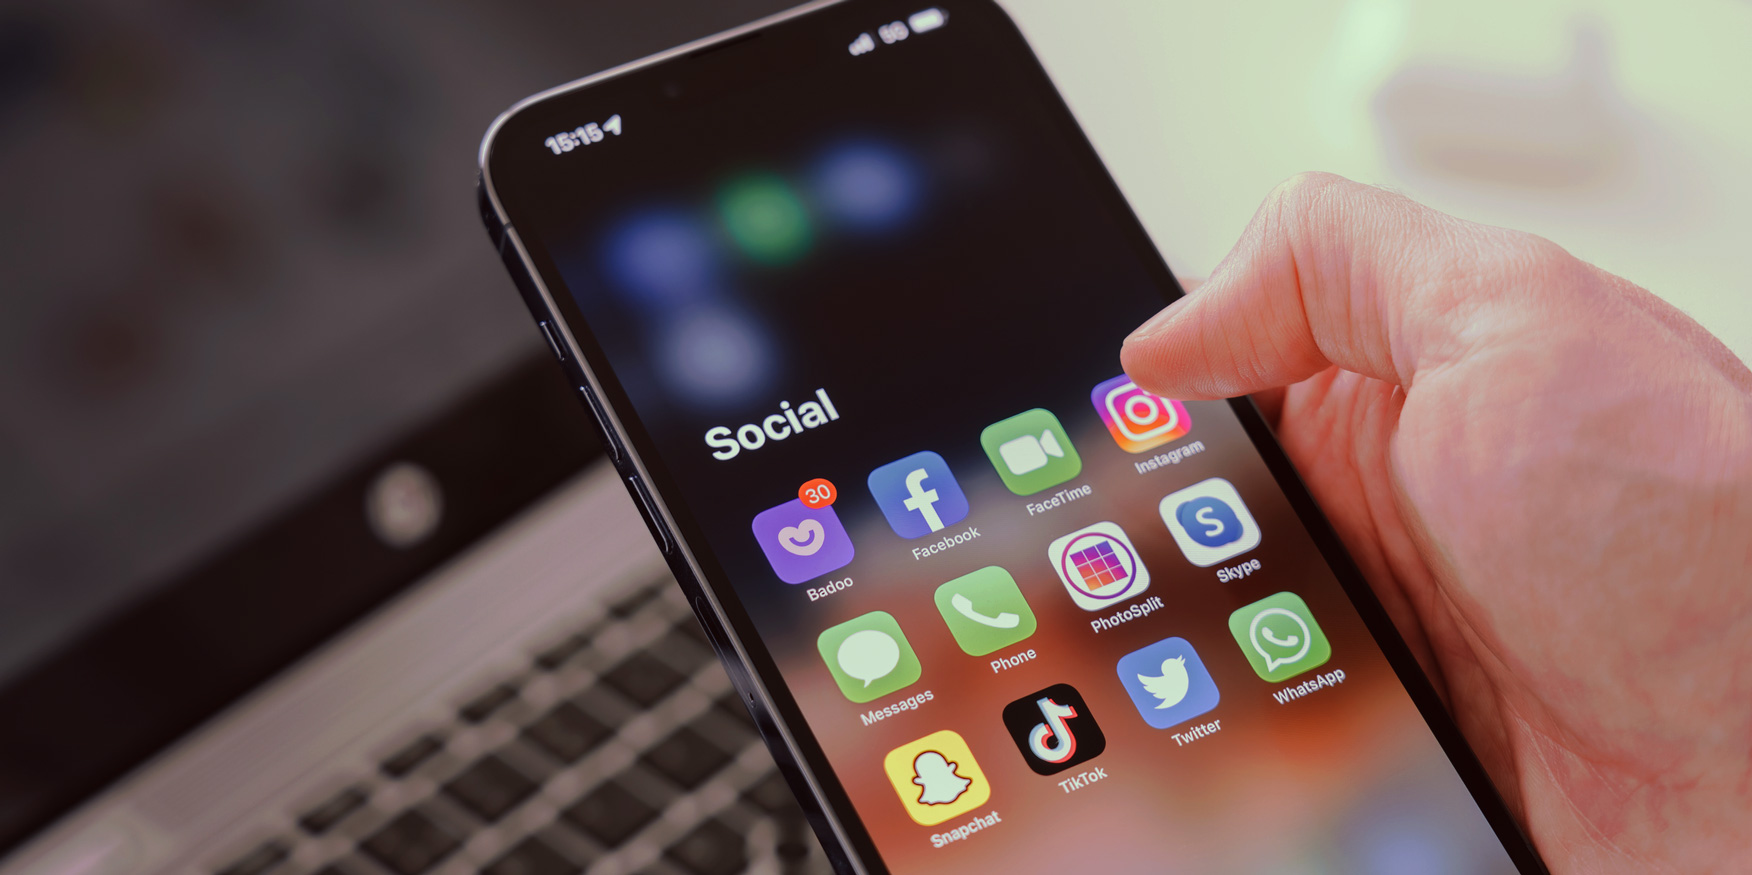 A smartphone displays multiple social media app icons